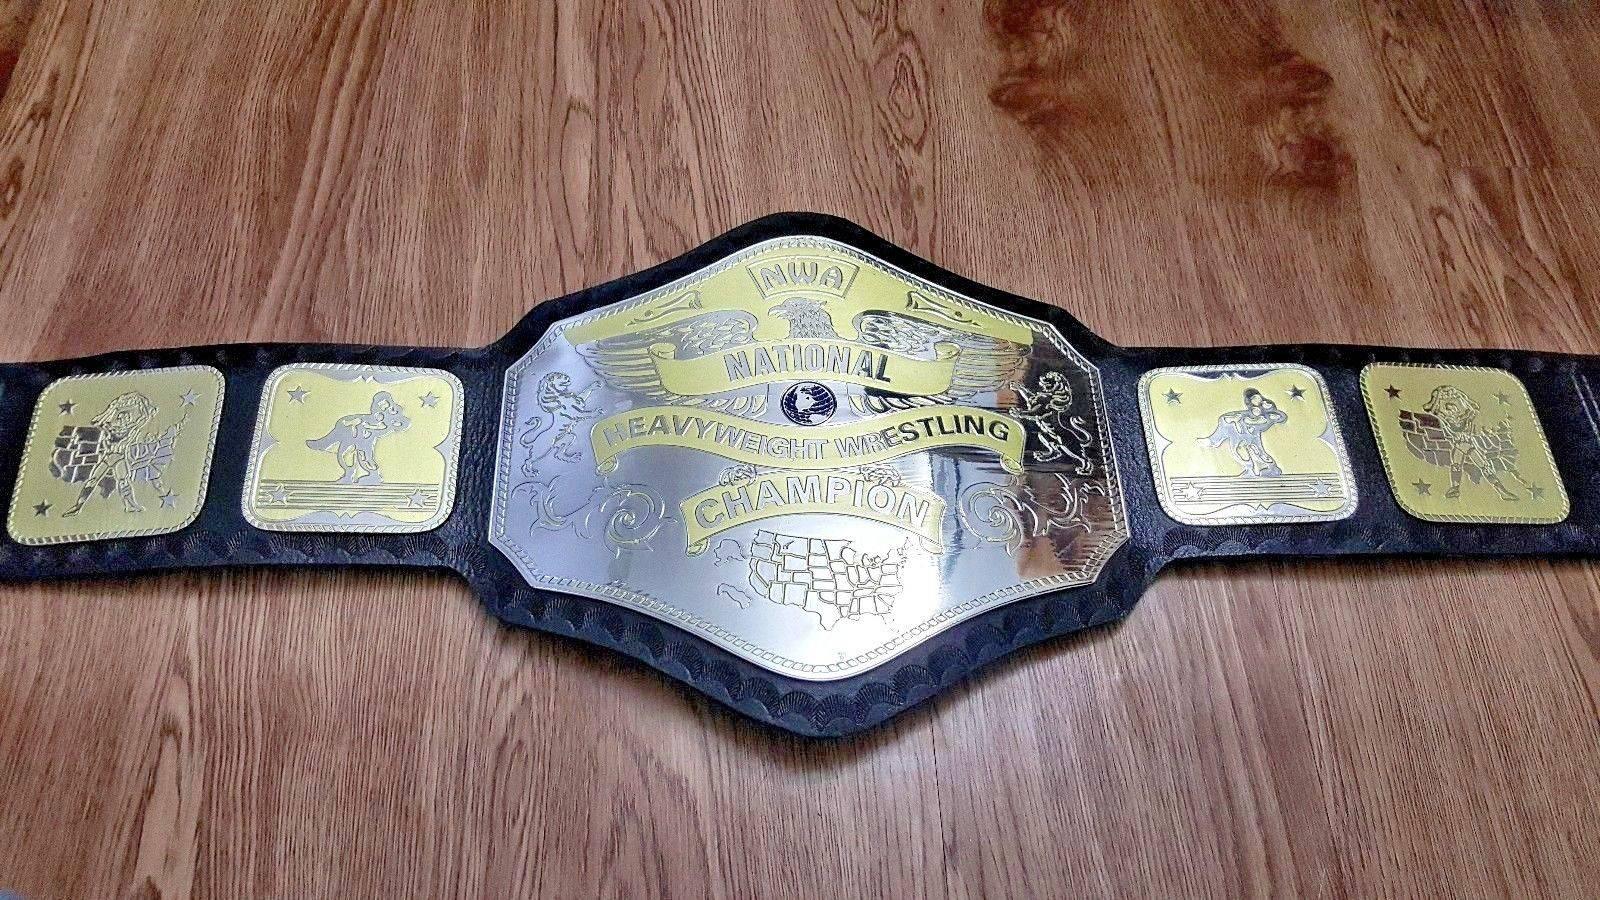 NWA NATIONAL HEAVYWEIGHT Brass Championship Belt - Zees Belts